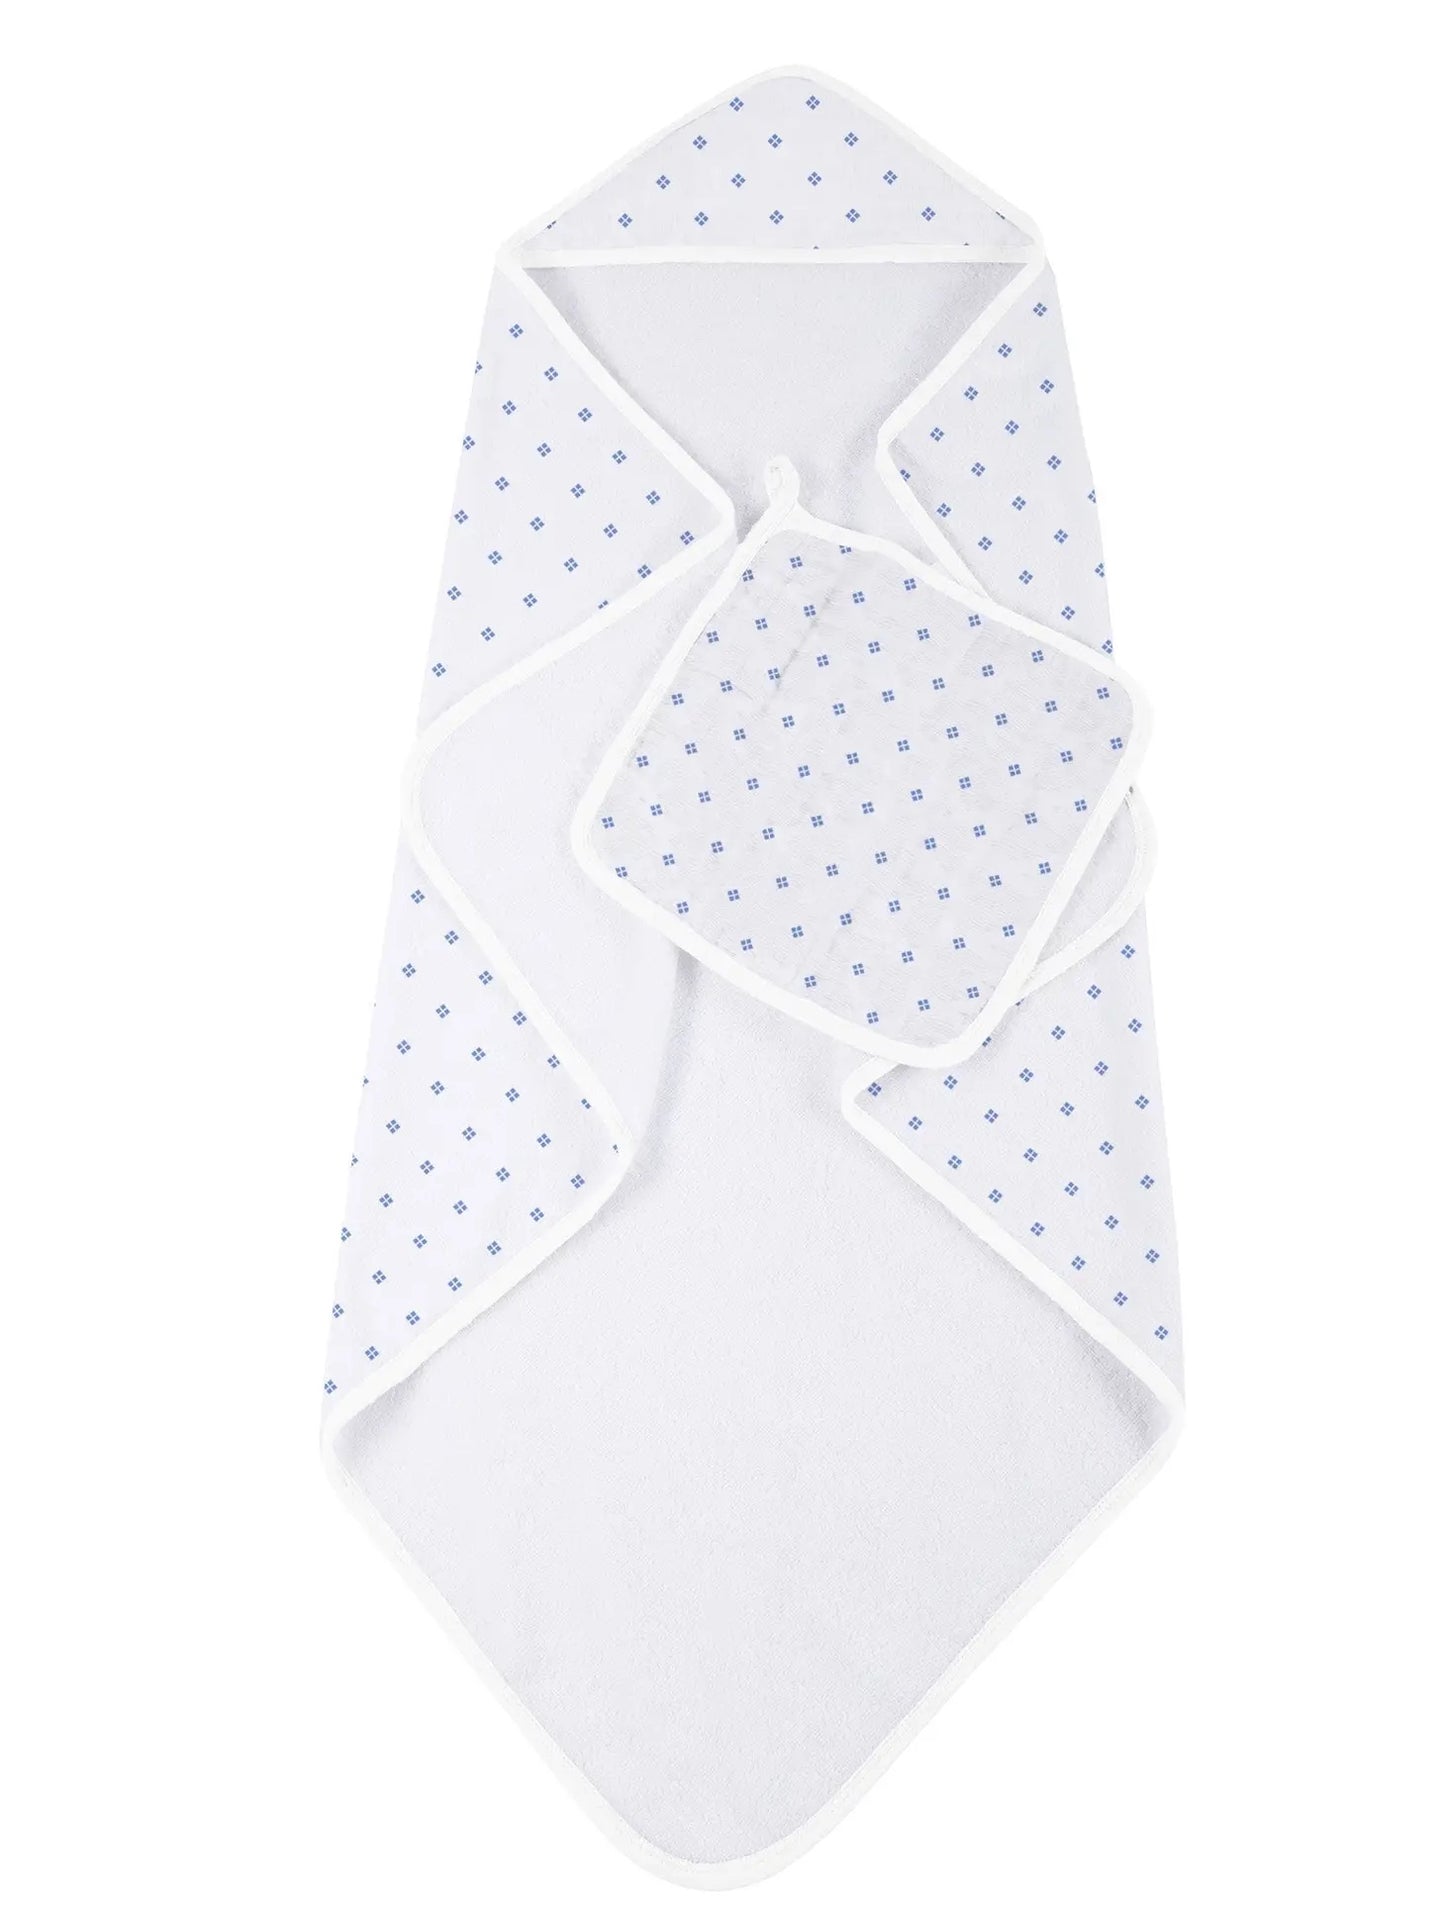 Periwinkle Diamond Polka Dot Hooded Towel and Washcloth Set